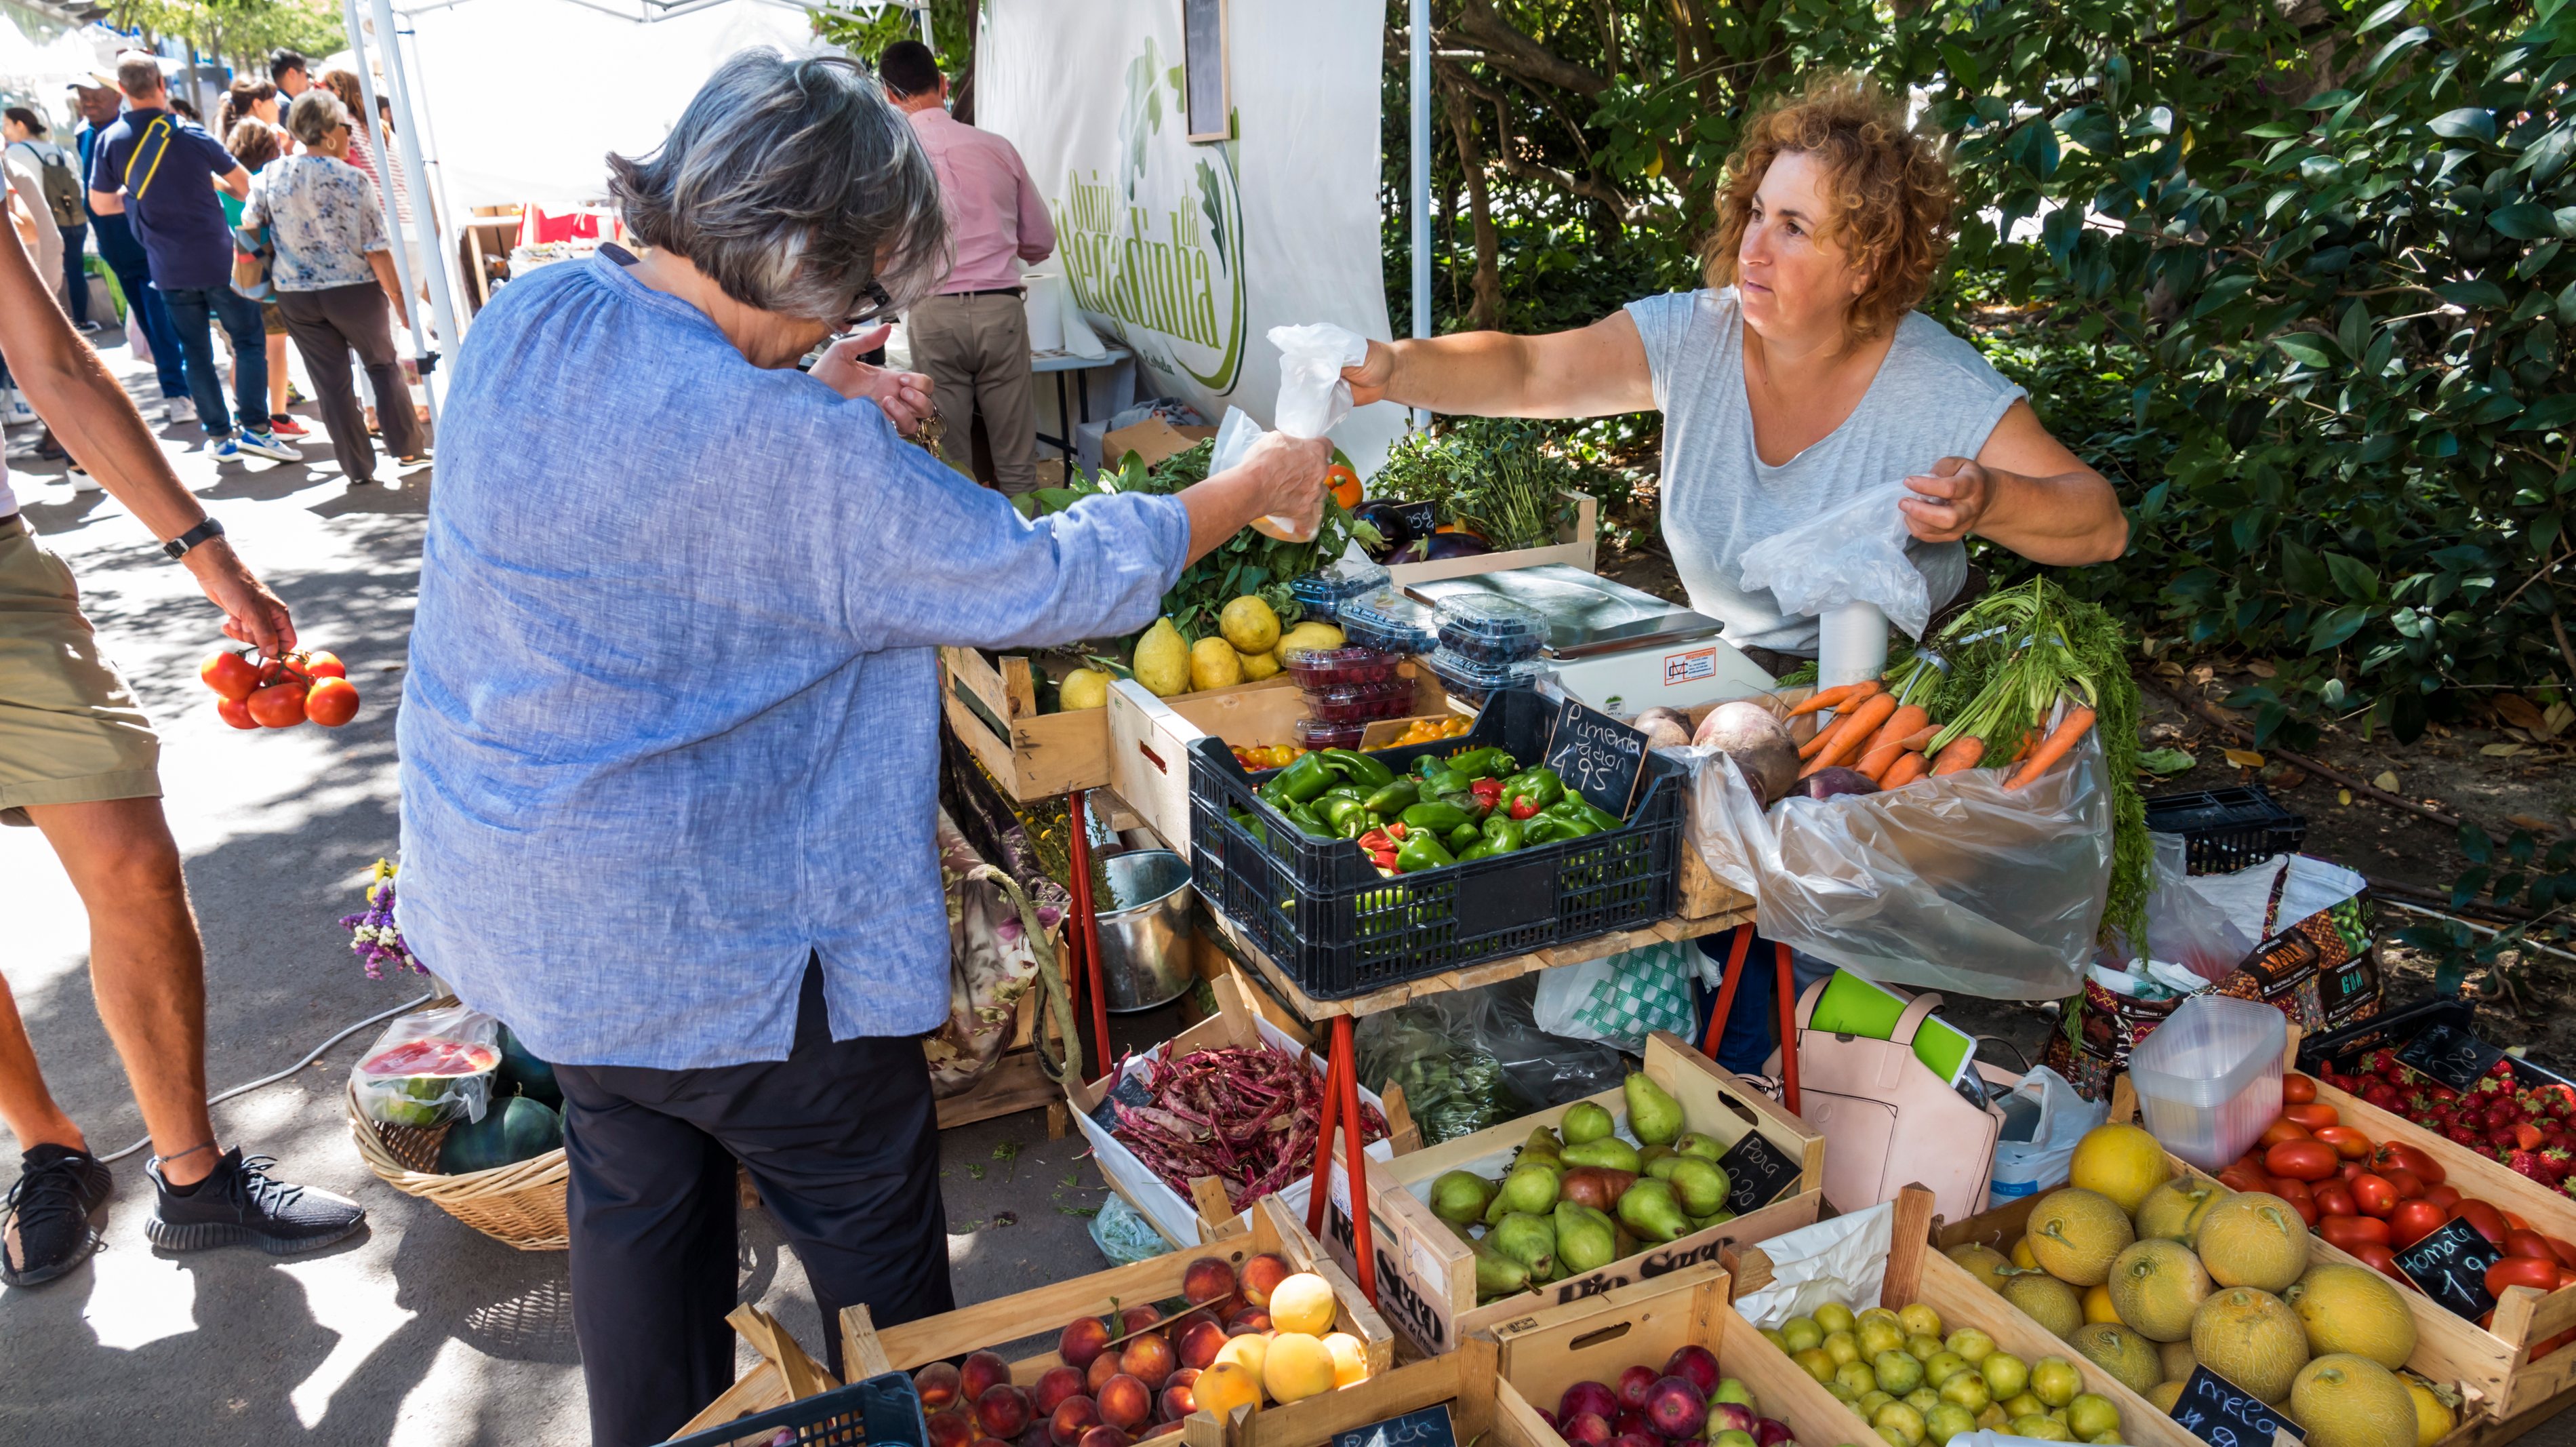 Portugal, Lisbon, Bairro Alto, Jardim do Principe Real, park vendor booth offering fresh produce